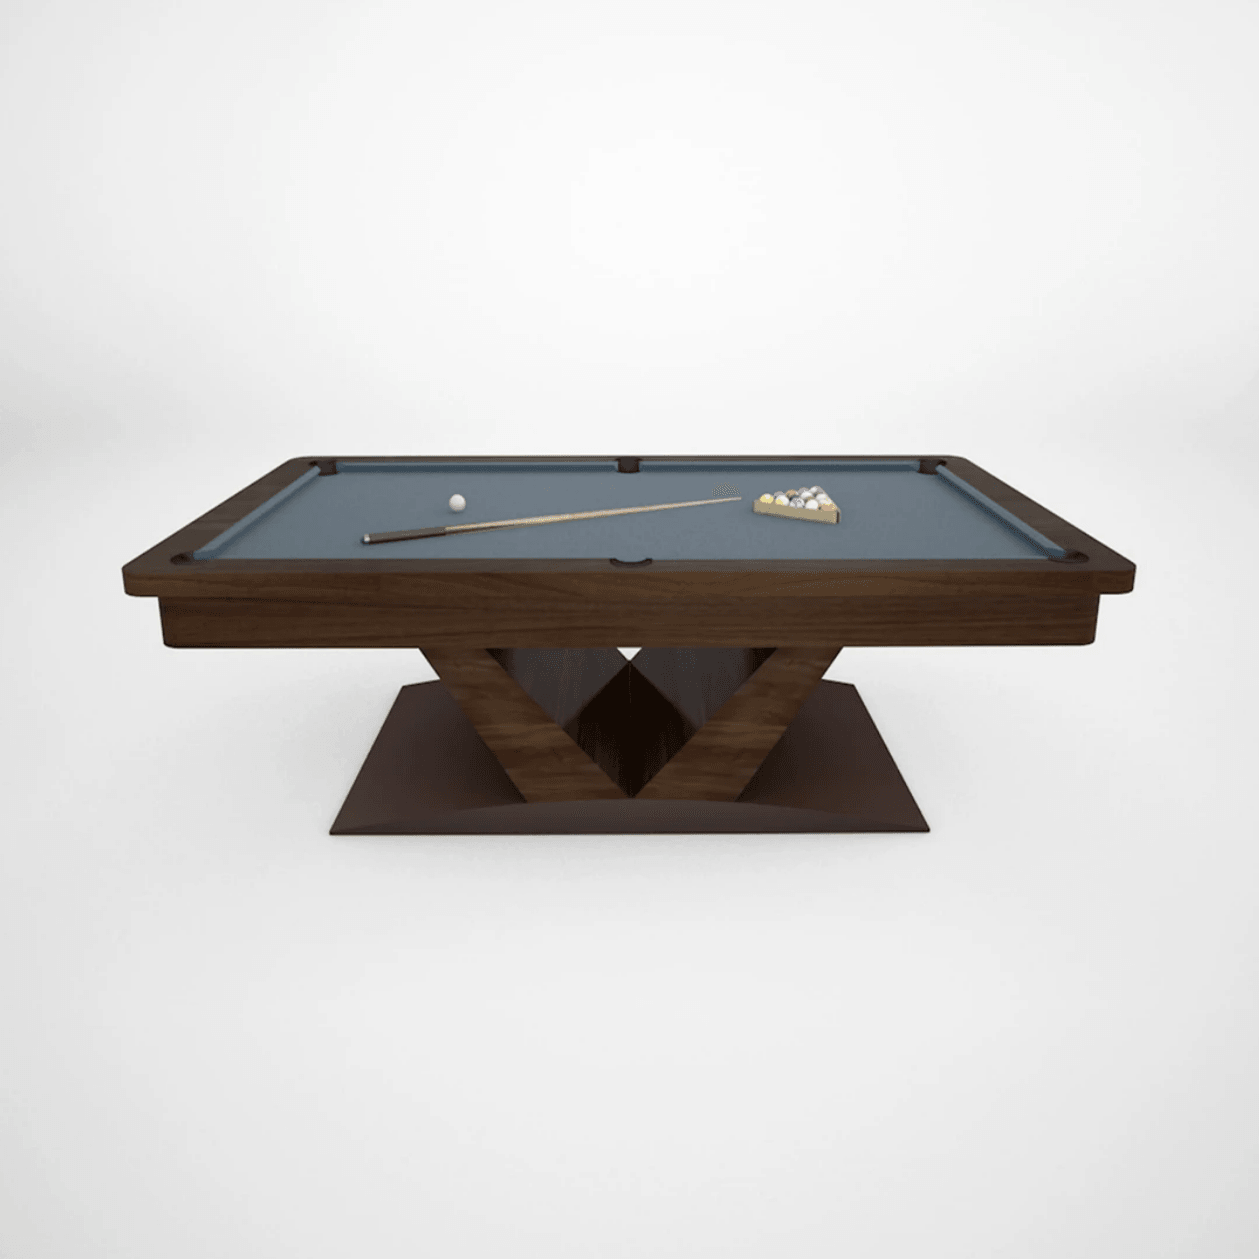 Table snooker billiards table indoor or outdoor luxury design CHE08 - Venini Furniture 